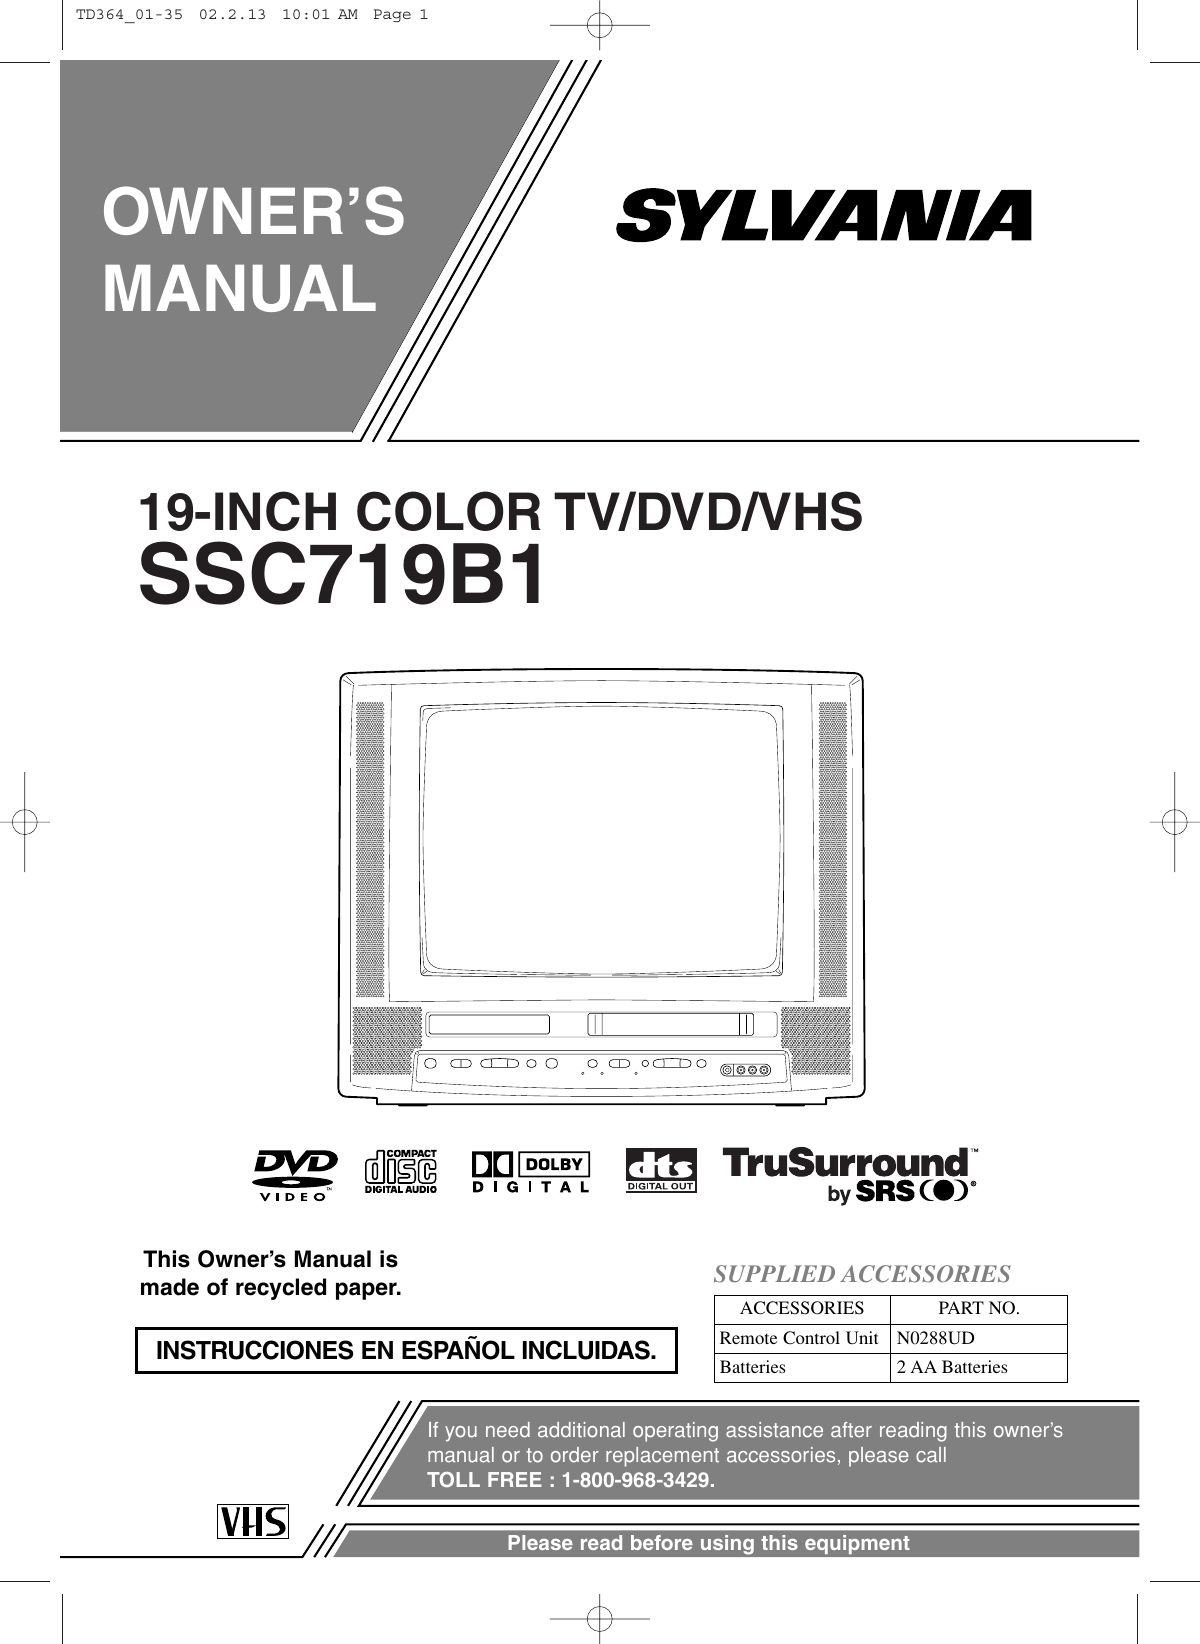 Sylvania Ssc719B1 Users Manual TD364_01 35